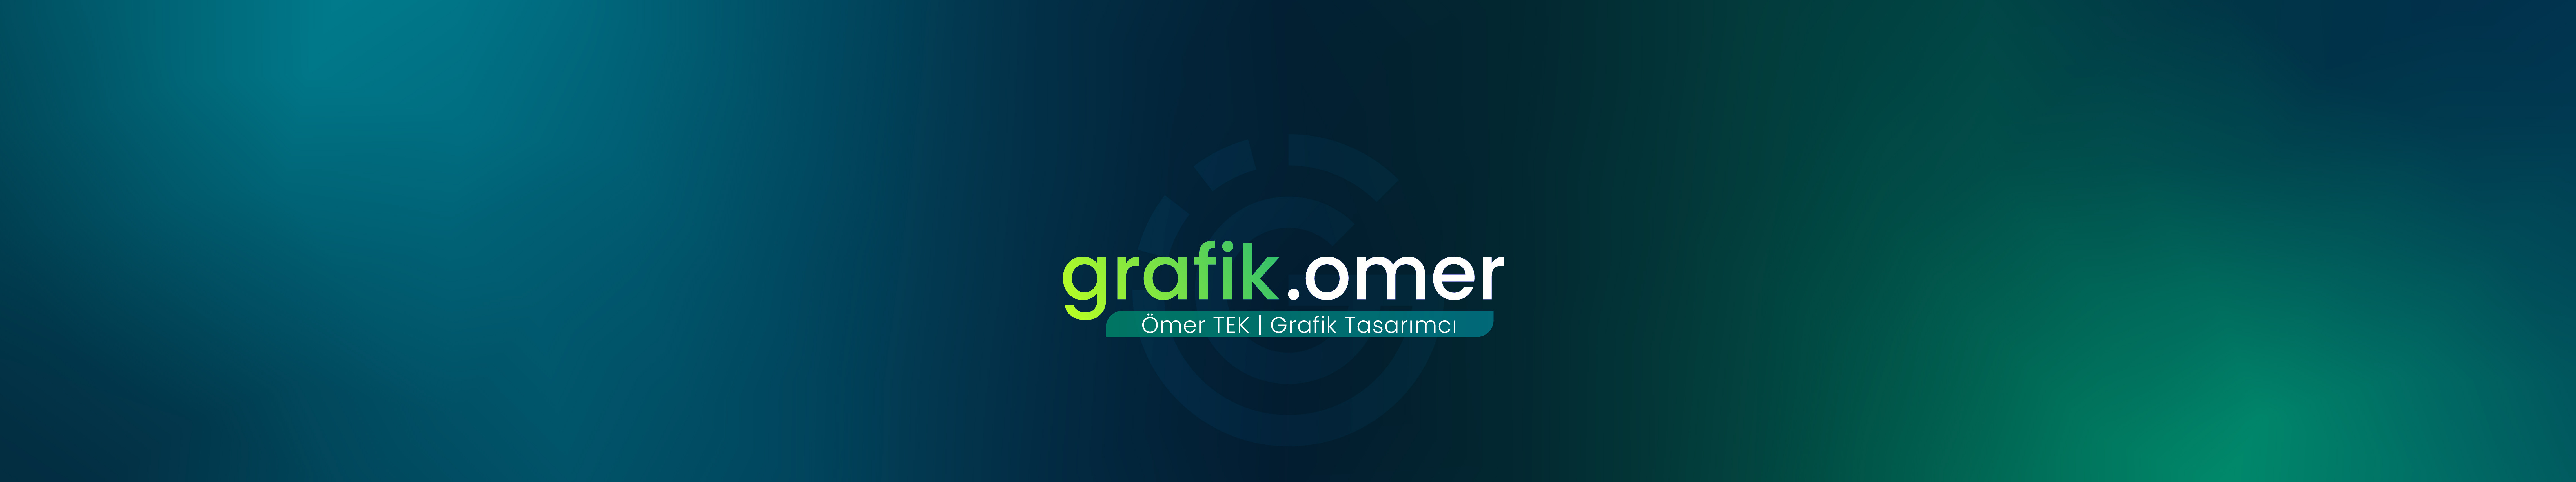 Banner del profilo di Ömer Tek